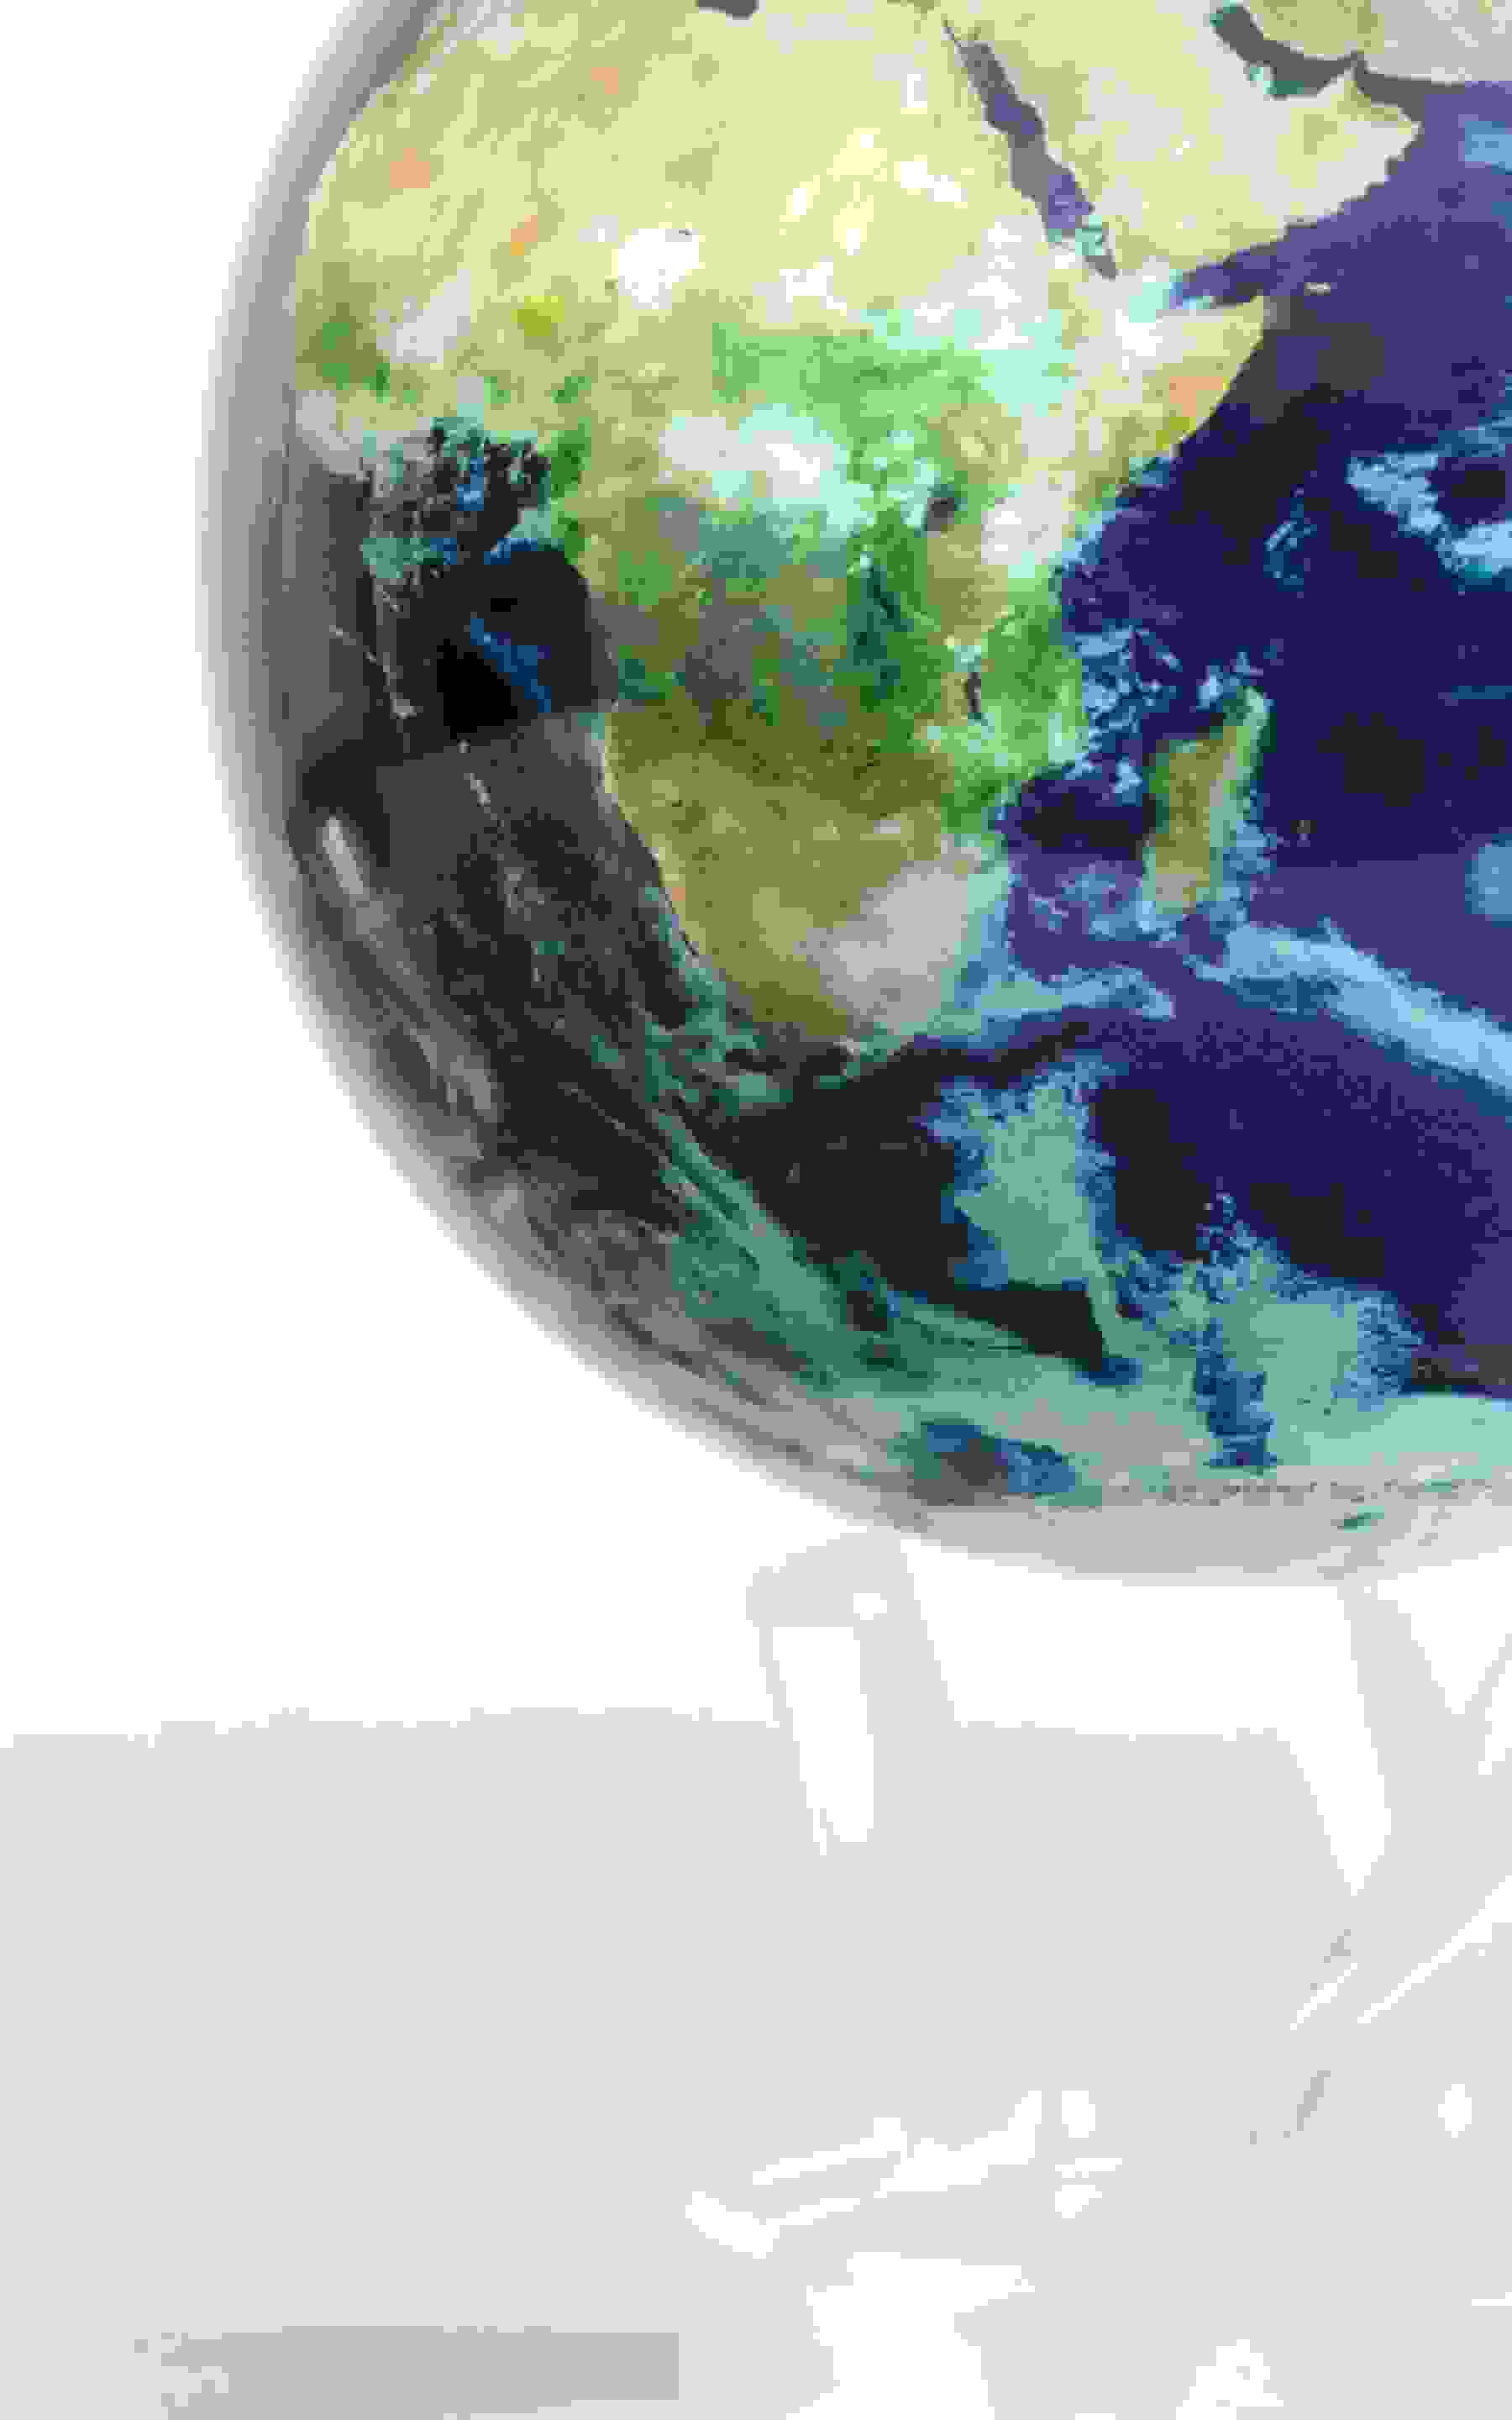 Mova Globe Earth with Clouds 4,5 Inch w/ Acrylic Base MG-45-STE-C